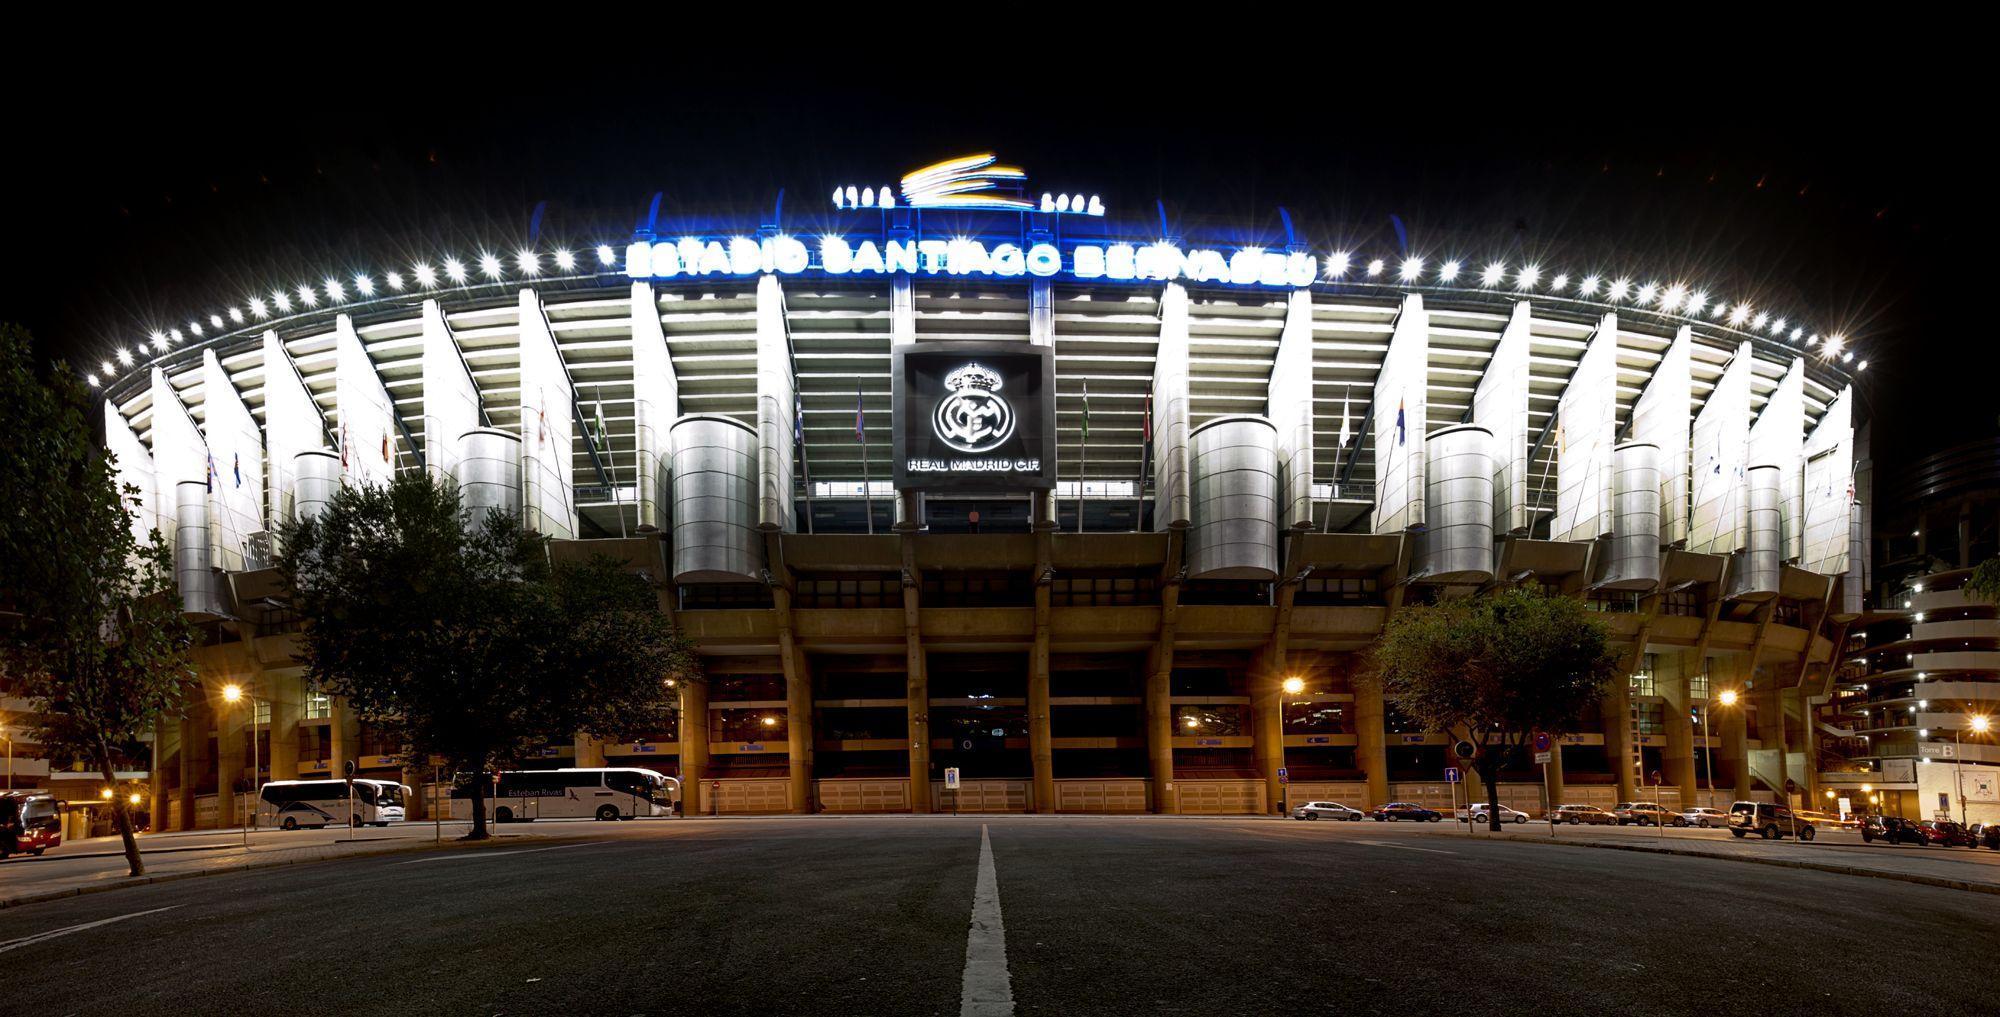 Real Madrid Santiago Bernabeu stadium wallpaper. HD Wallpaper